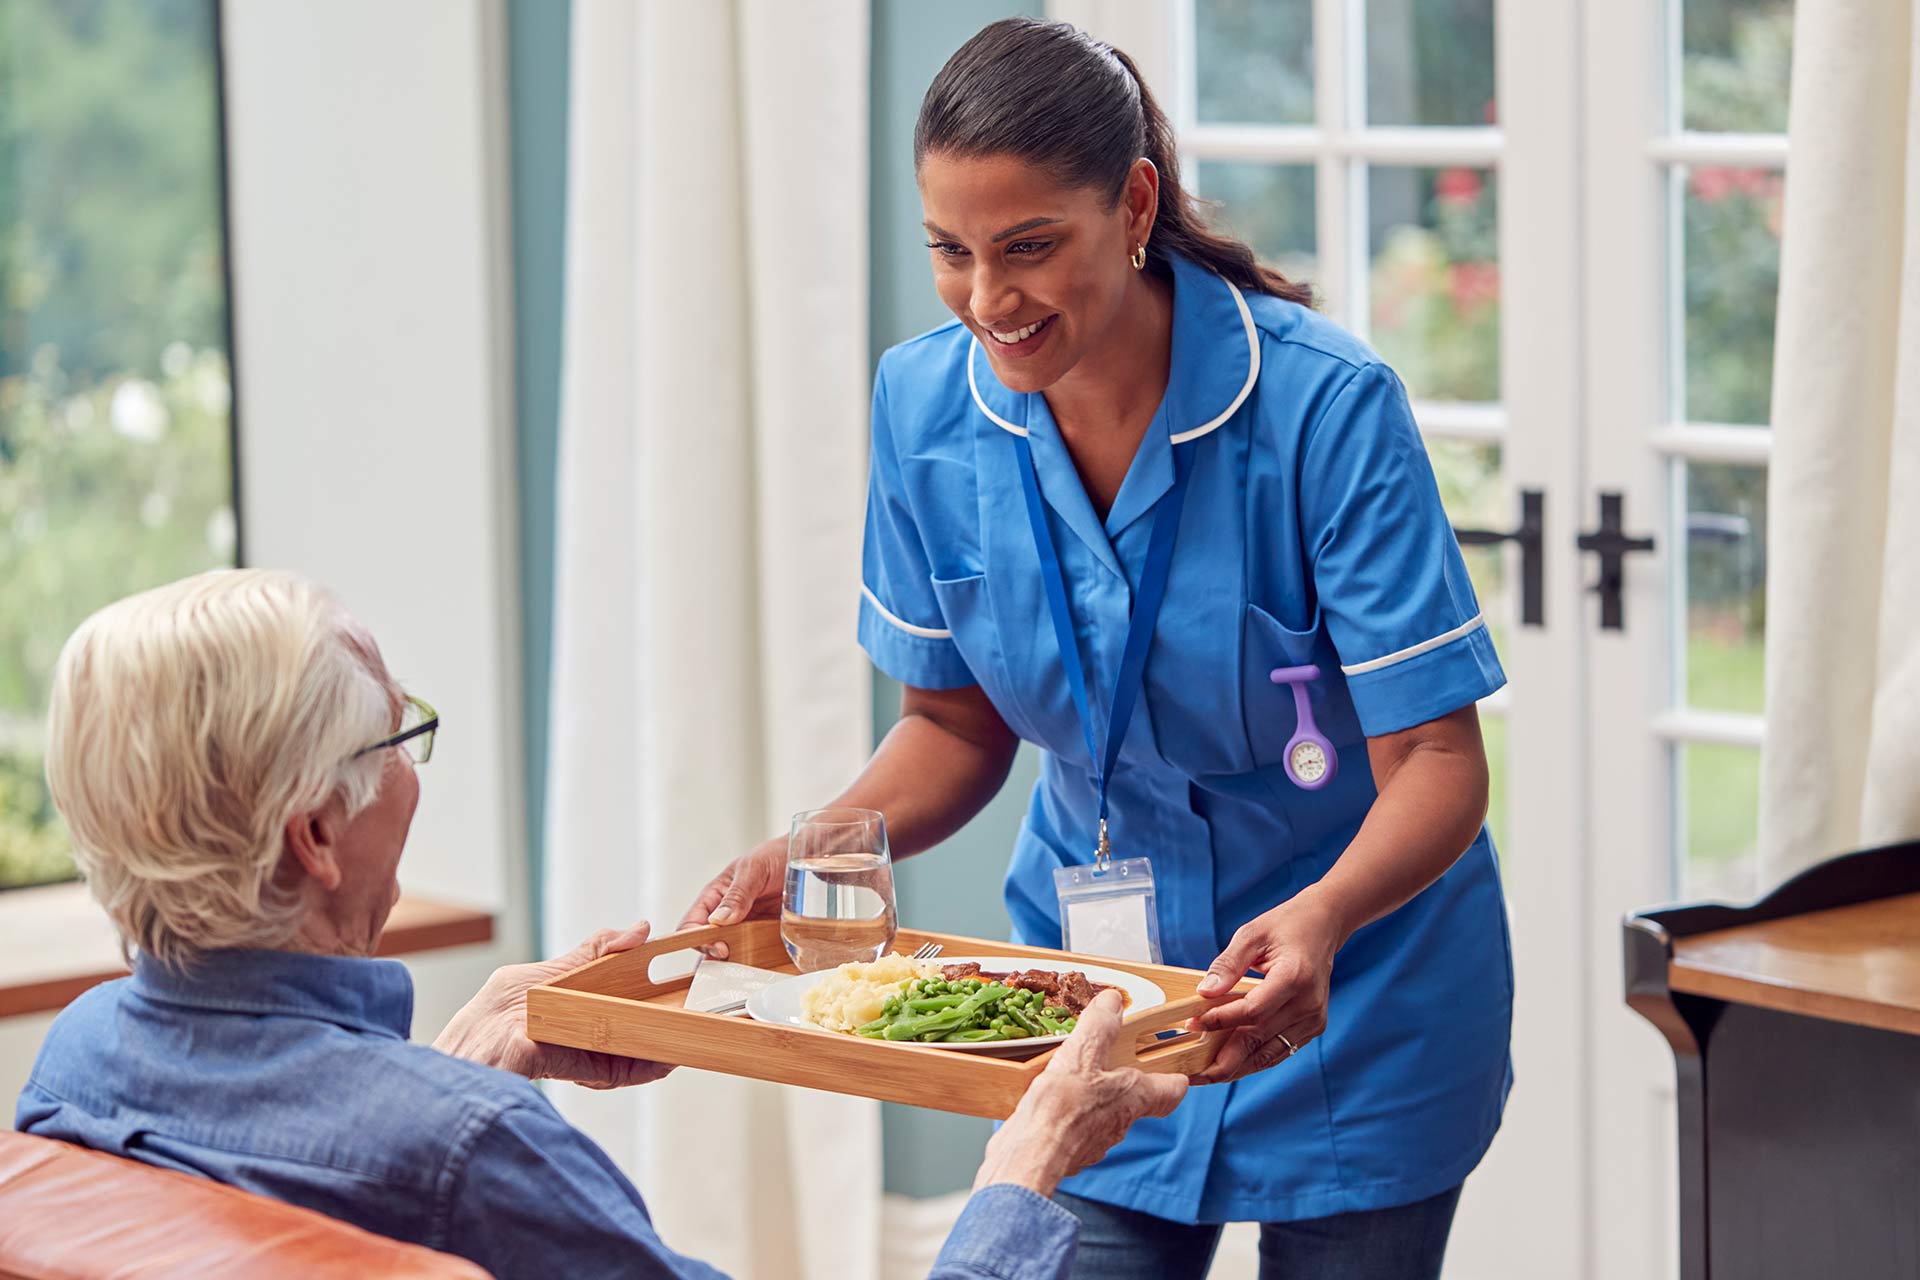 female-care-worker-in-uniform-bringing-meal-on-tra-2022-04-04-21-27-31-utc.jpg